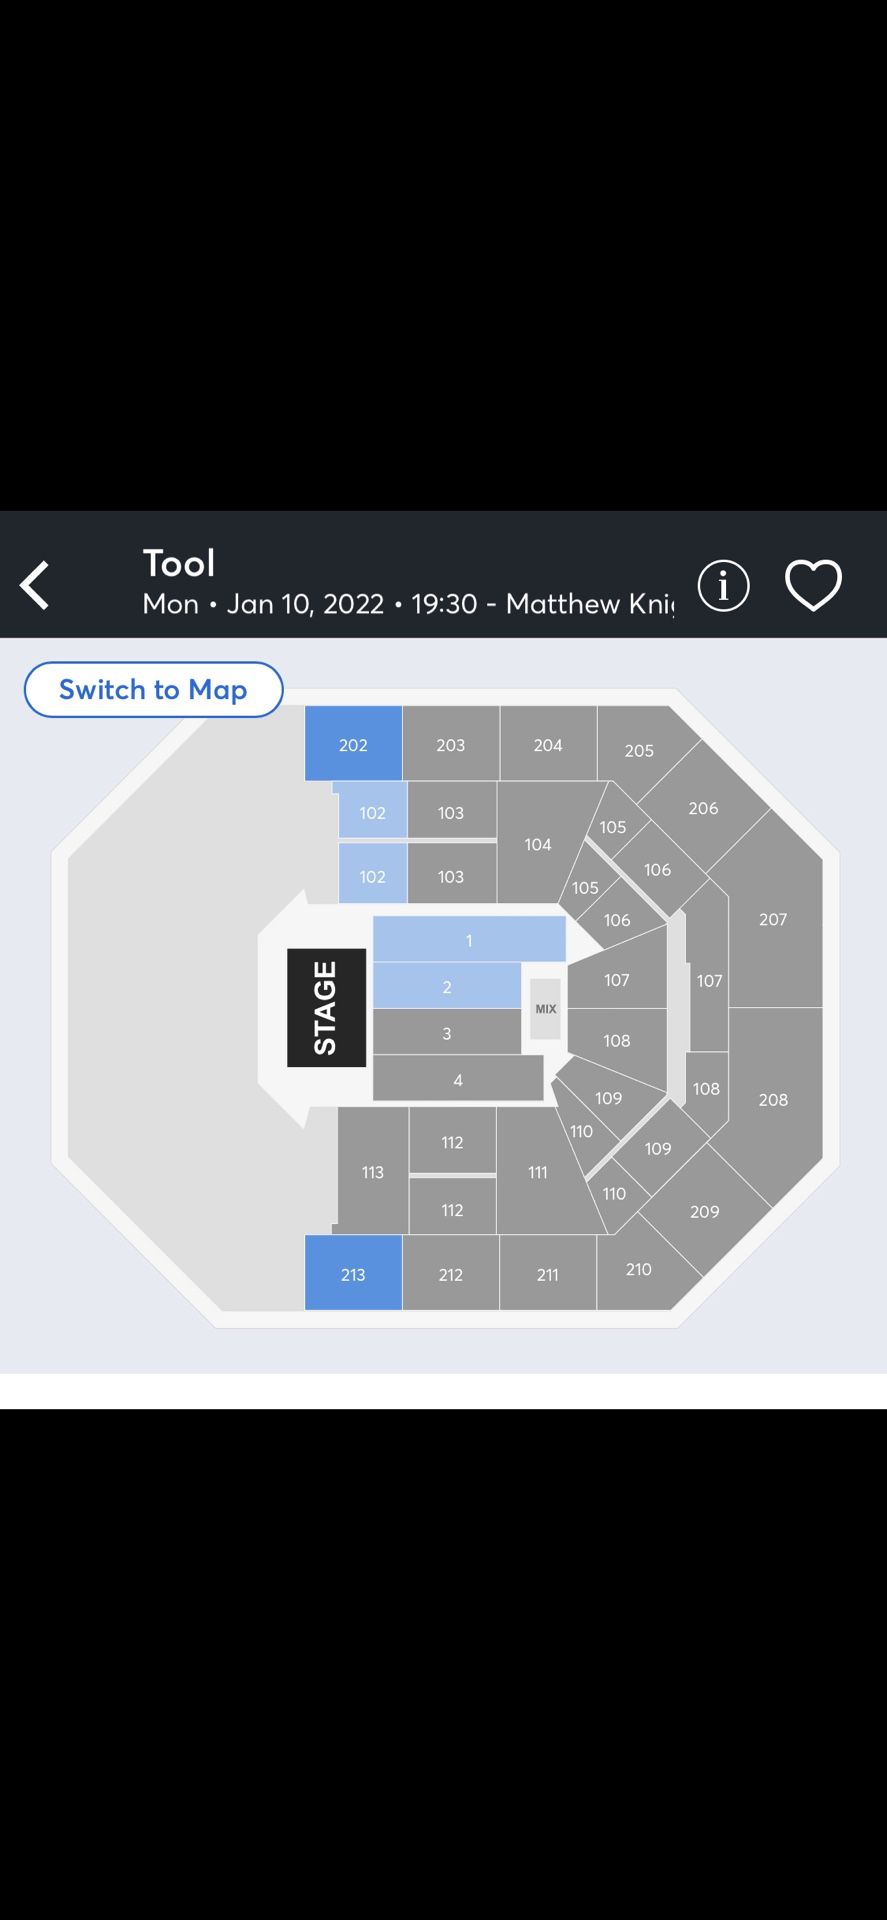 TOOL tickets (4) January 10th, 2022 Matthew Knight Arena